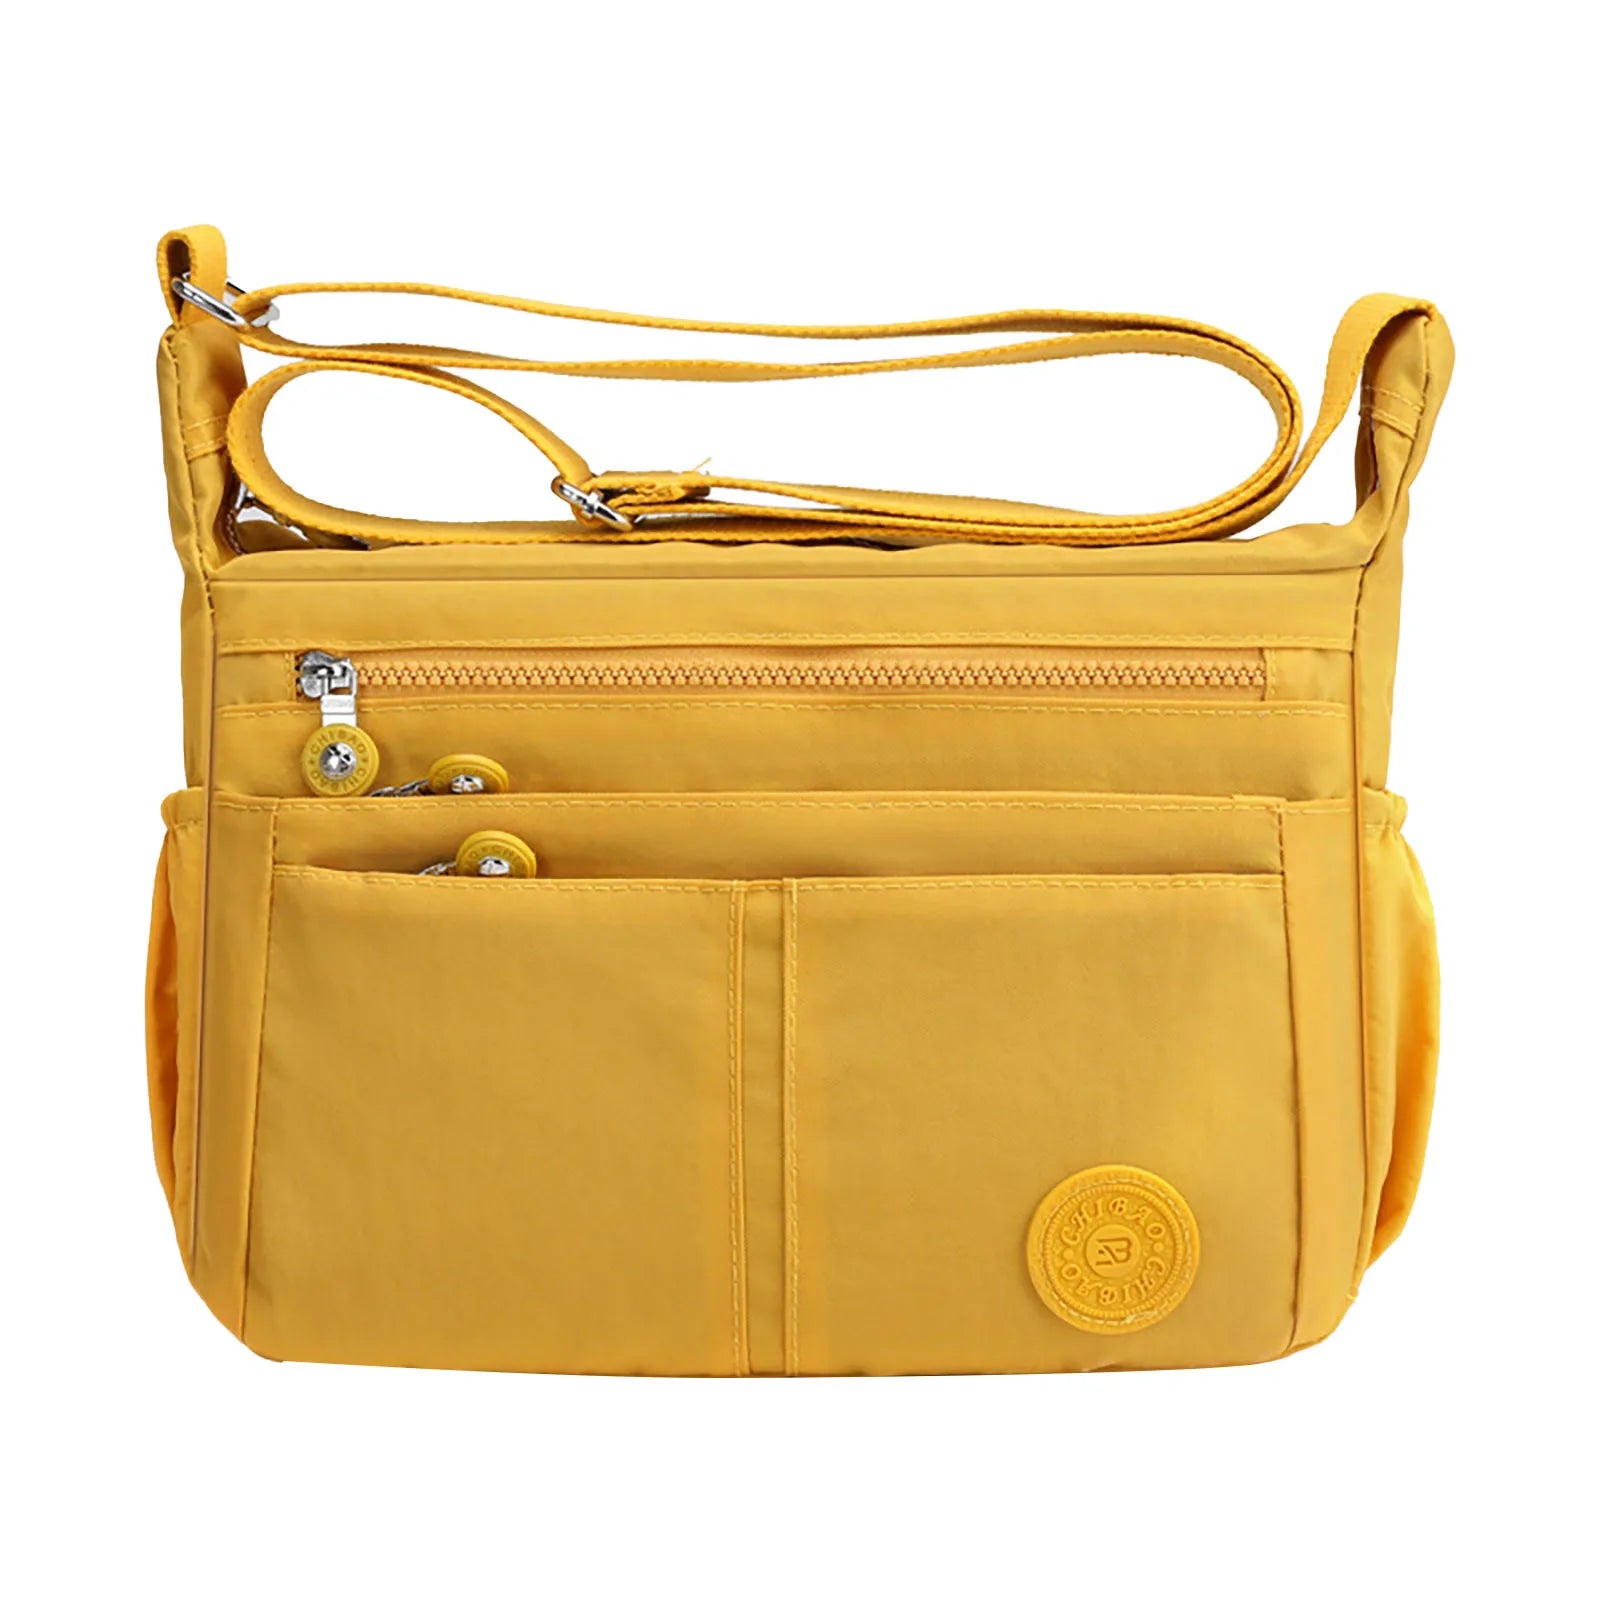 Nylon Cloth Bag One Shoulder Bag Lightweight Tote - Fashionqueene.com